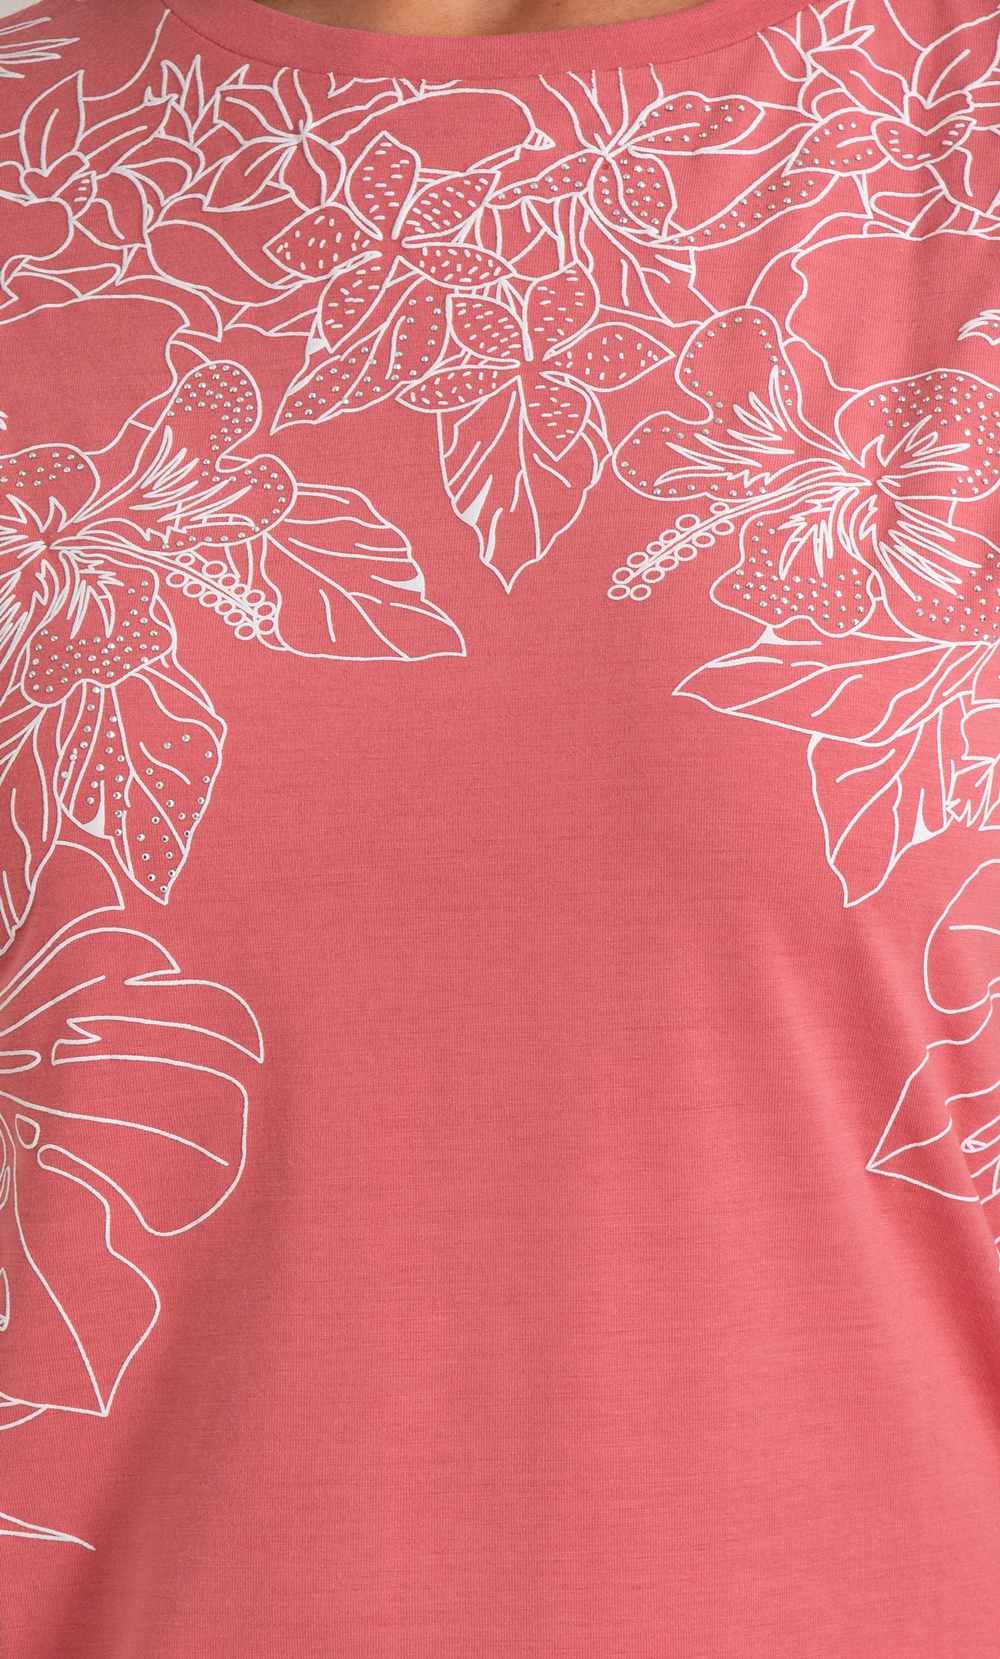 Embellished Garden Print Jersey Top